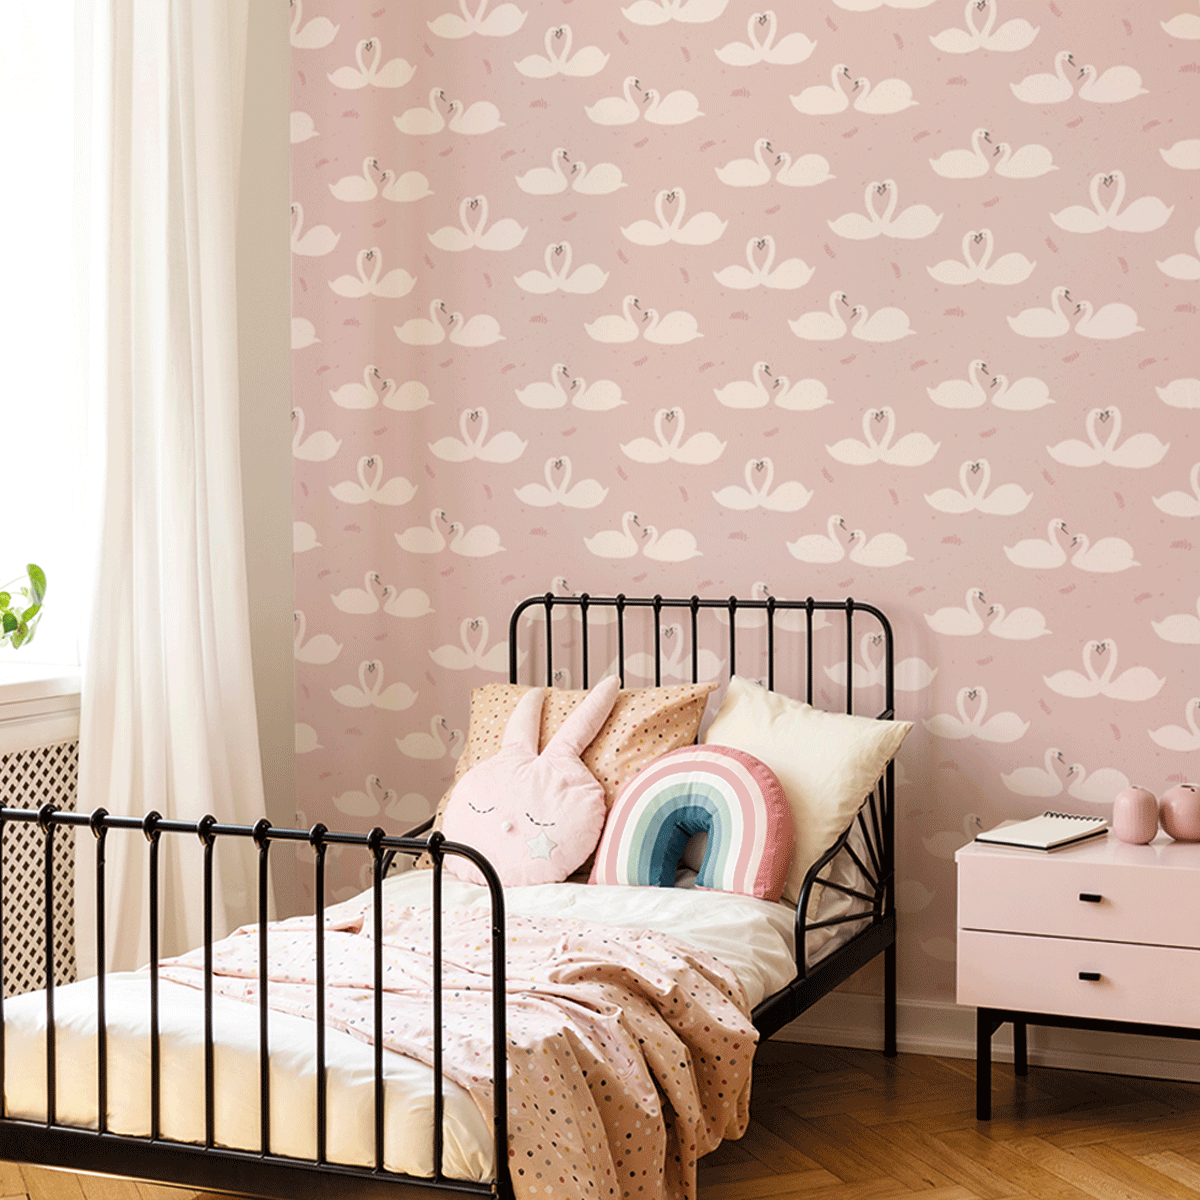 removable wallpaper, kids bedroom wallpaper, nursery wallpaper, kids bedroom ideas, nursery ideas, white swans wallpaper, swan wallpaper